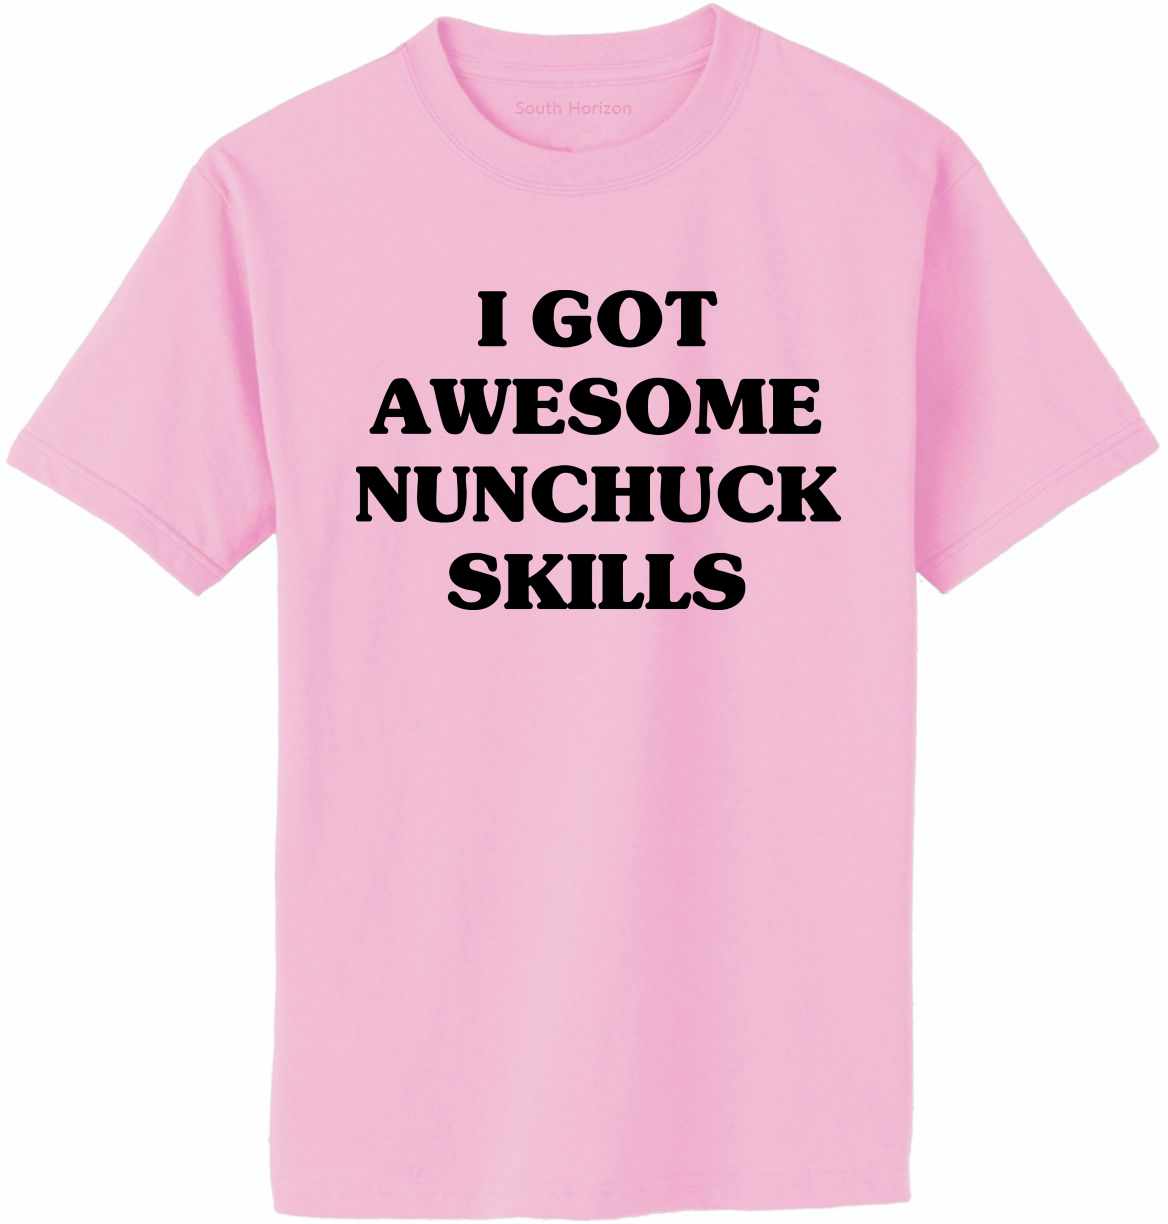 I GOT AWESOME NUNCHUCK SKILLS Adult T-Shirt (#377-1)